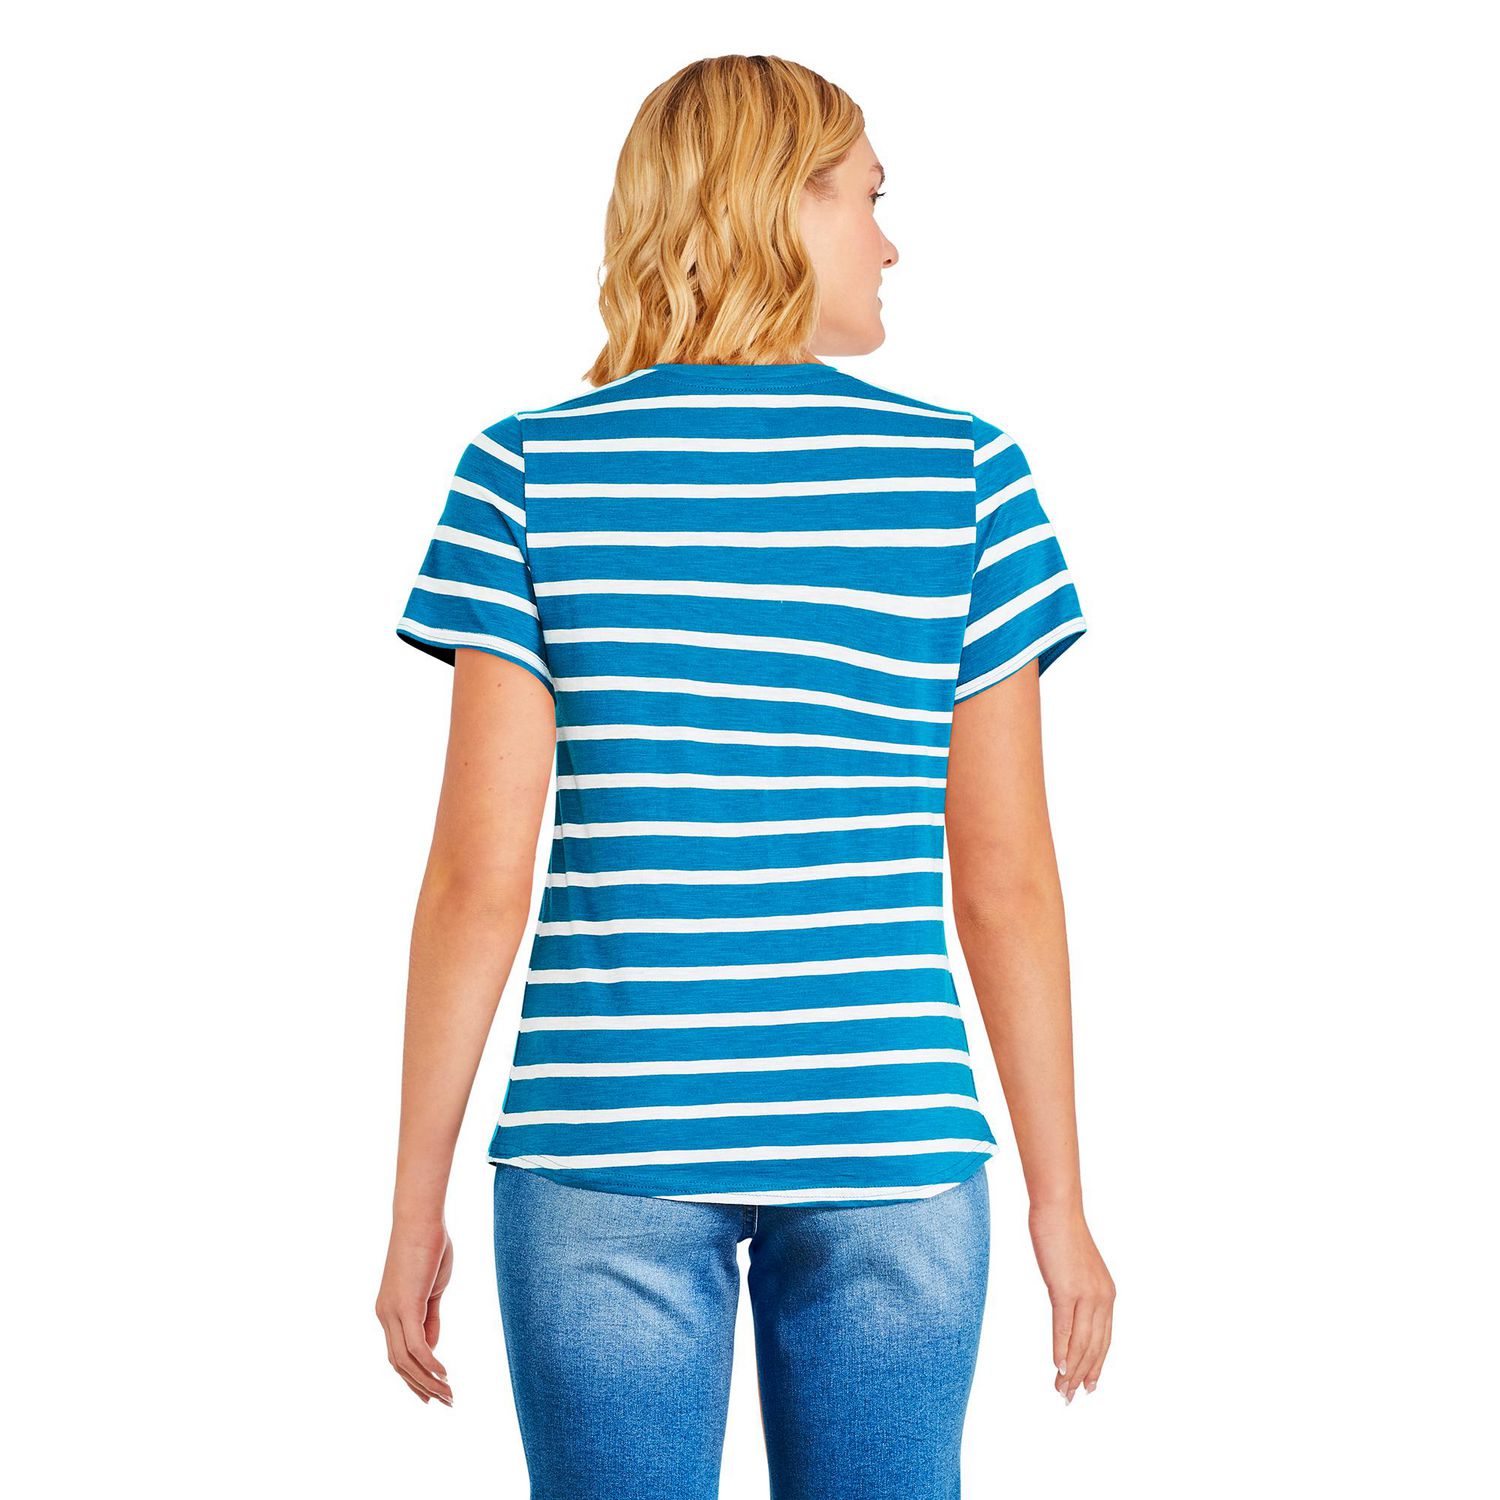 George Walmart Tee Women's Striped Size L 42-44 Lavander Short Sleeves